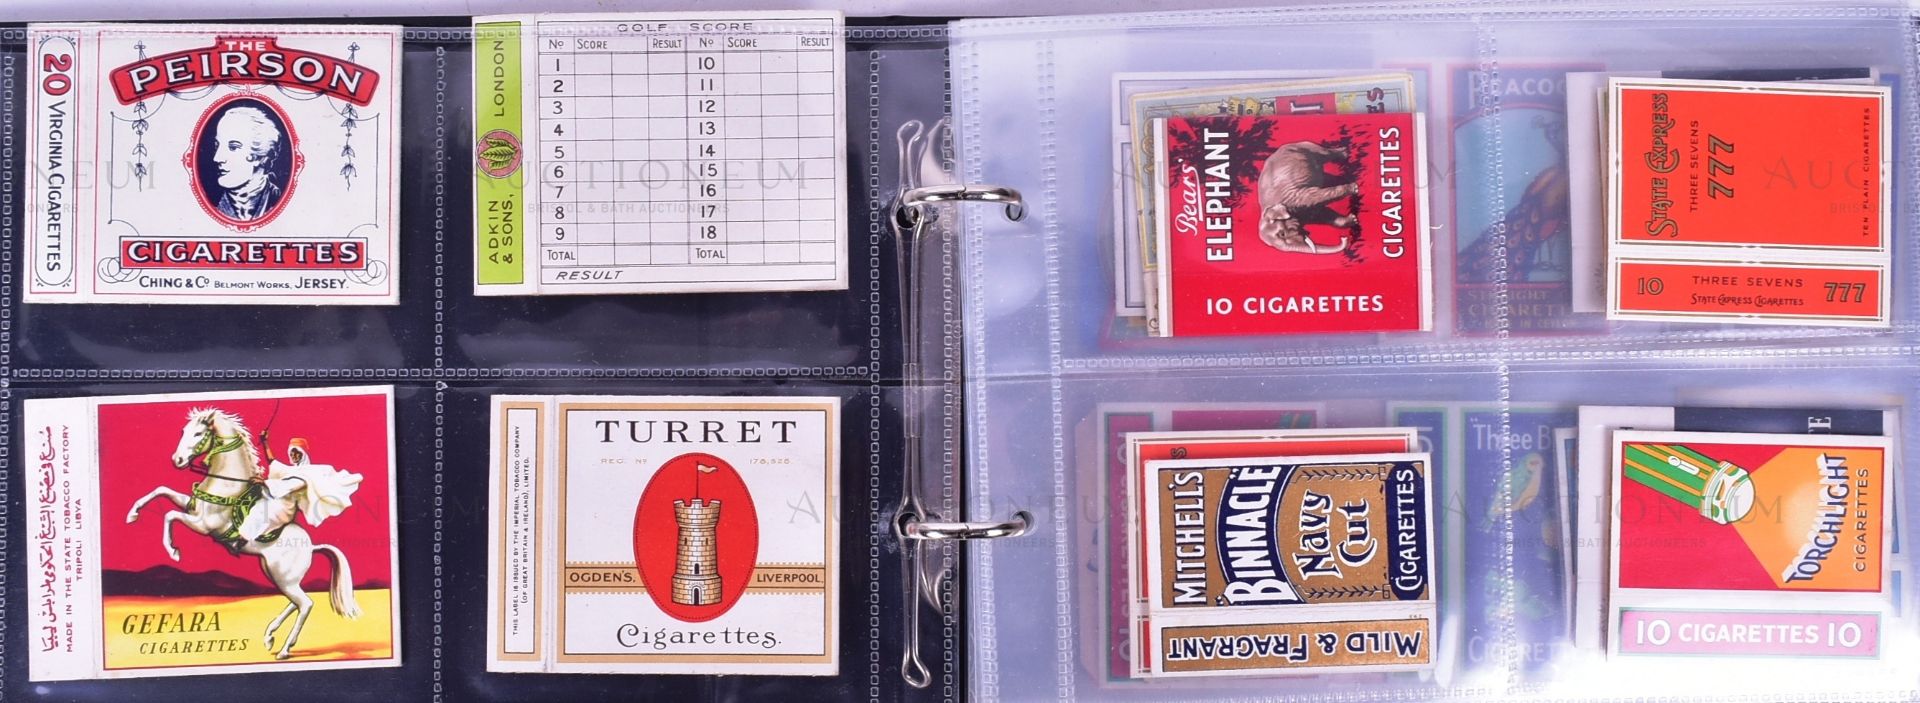 CIGARETTE PACKETS - ALBUM OF VINTAGE CIGARETTE PACKS - Image 3 of 16